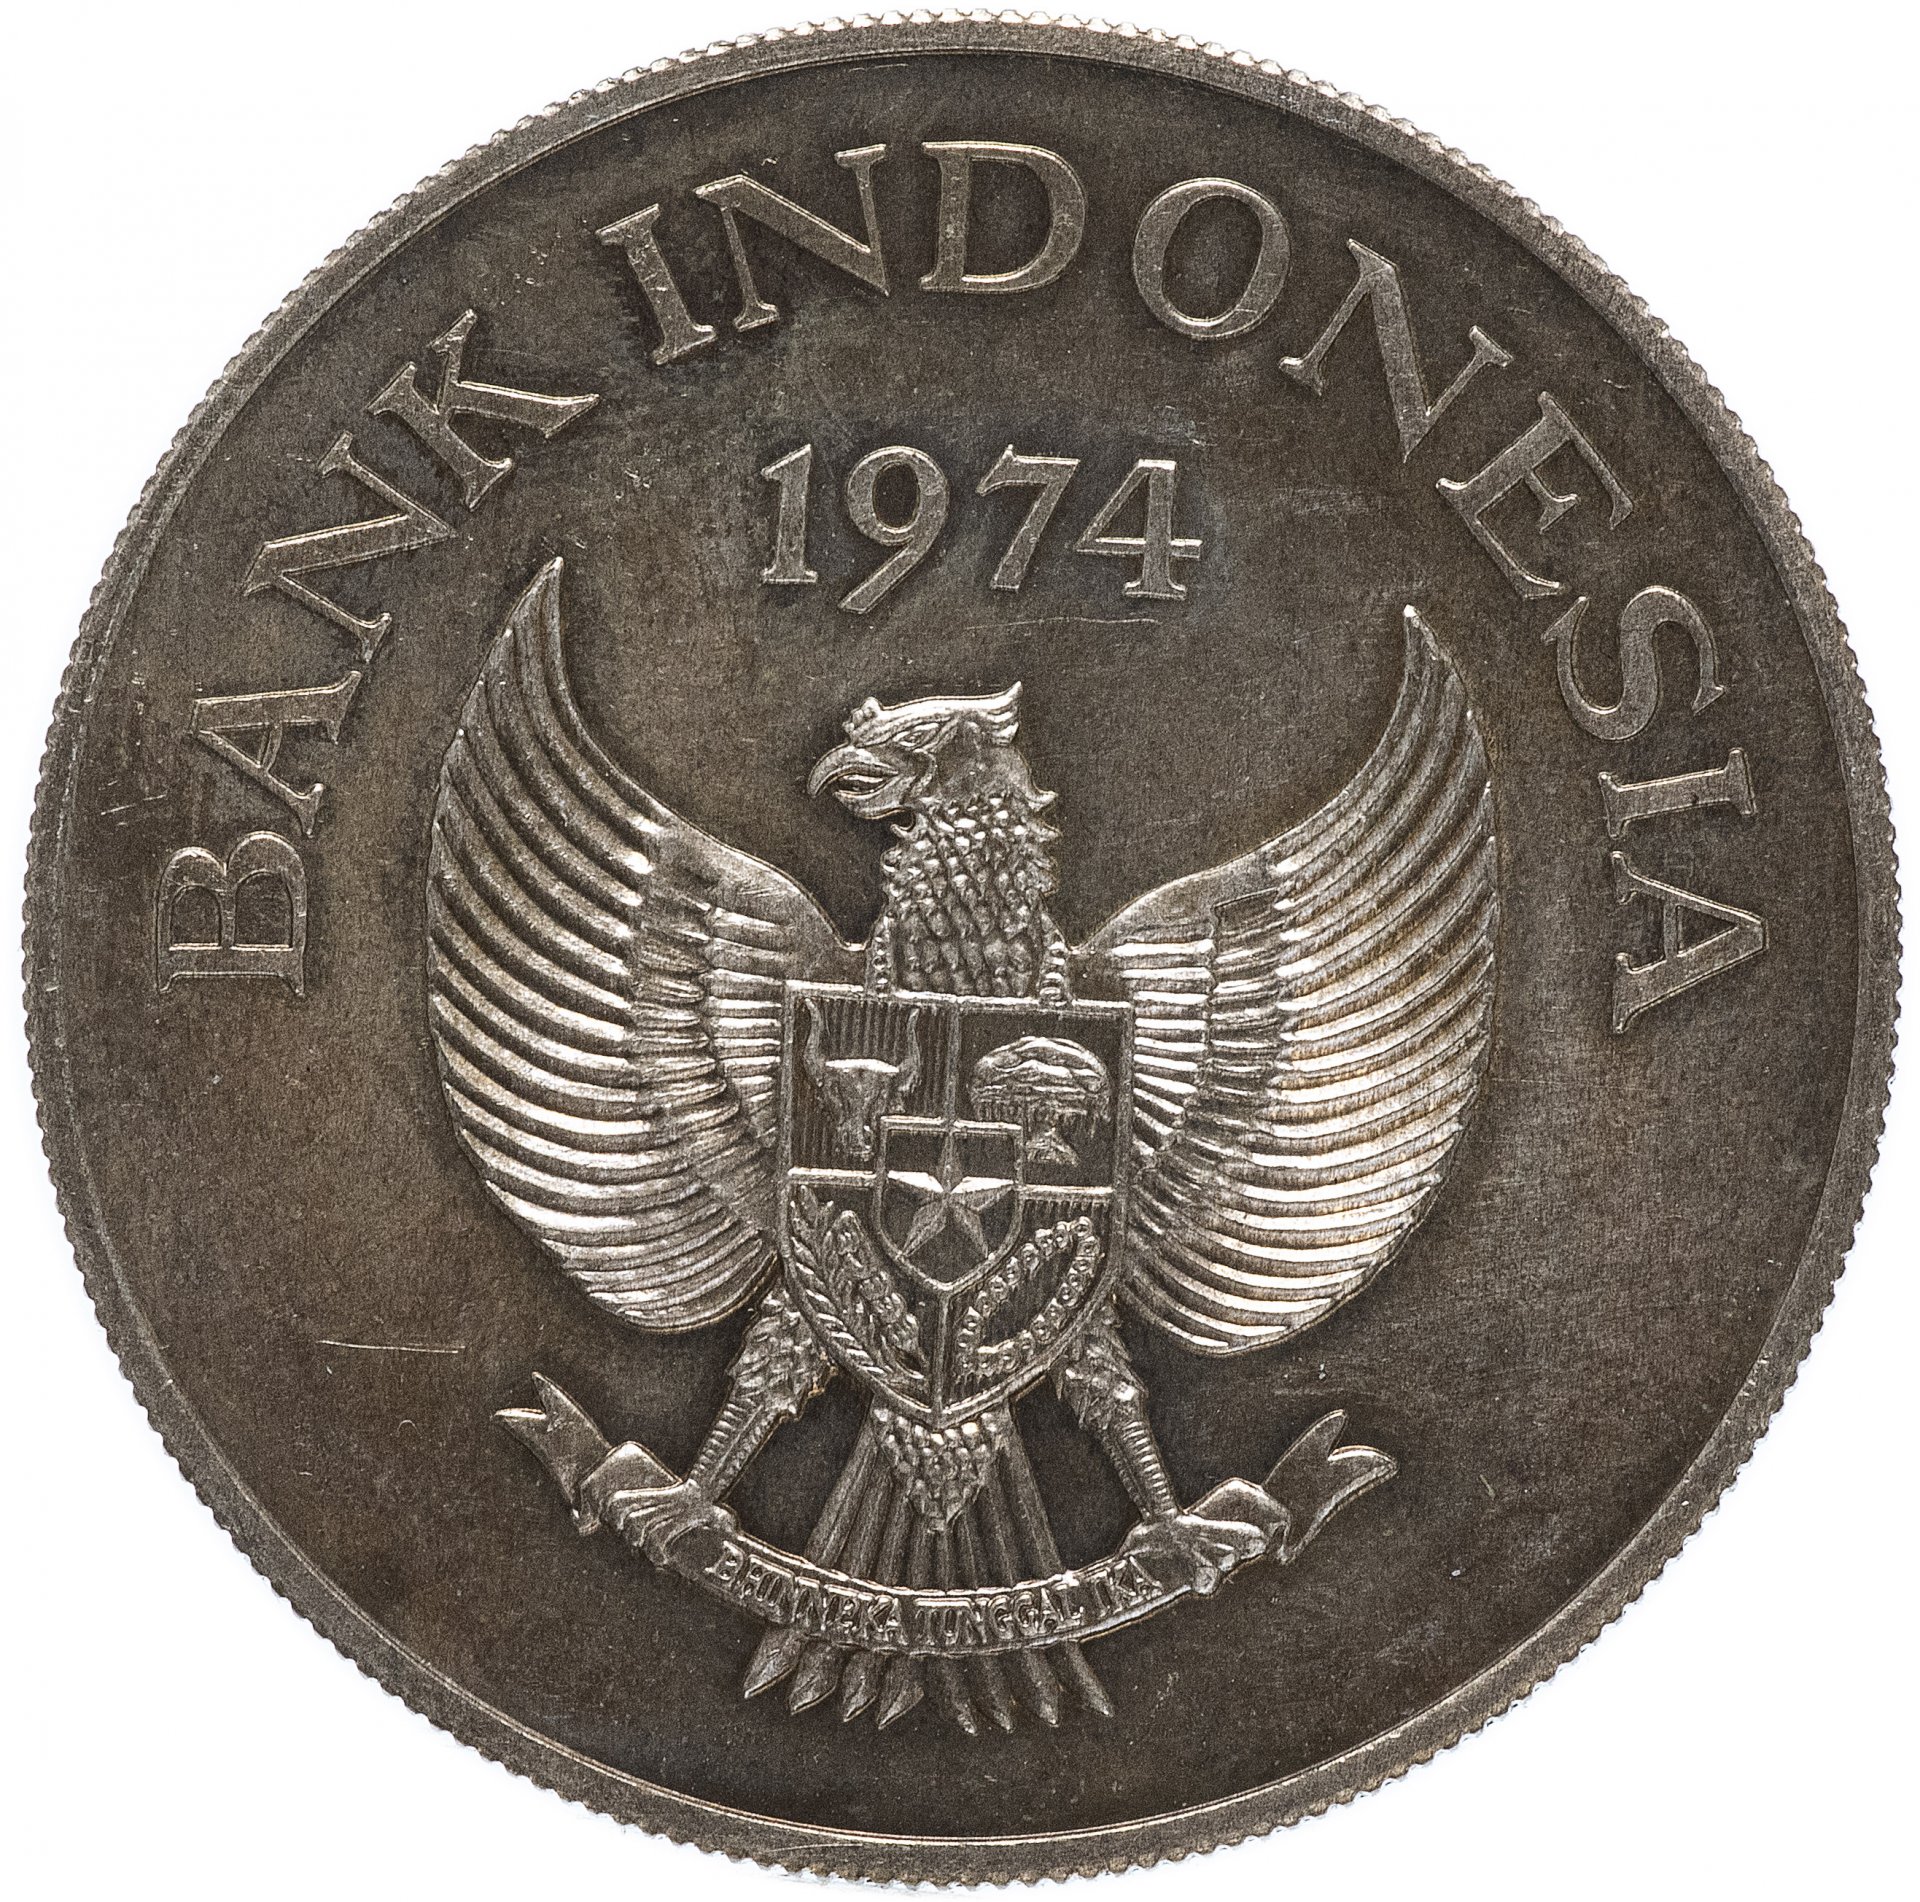 5000 рупий. Монеты Индонезии.